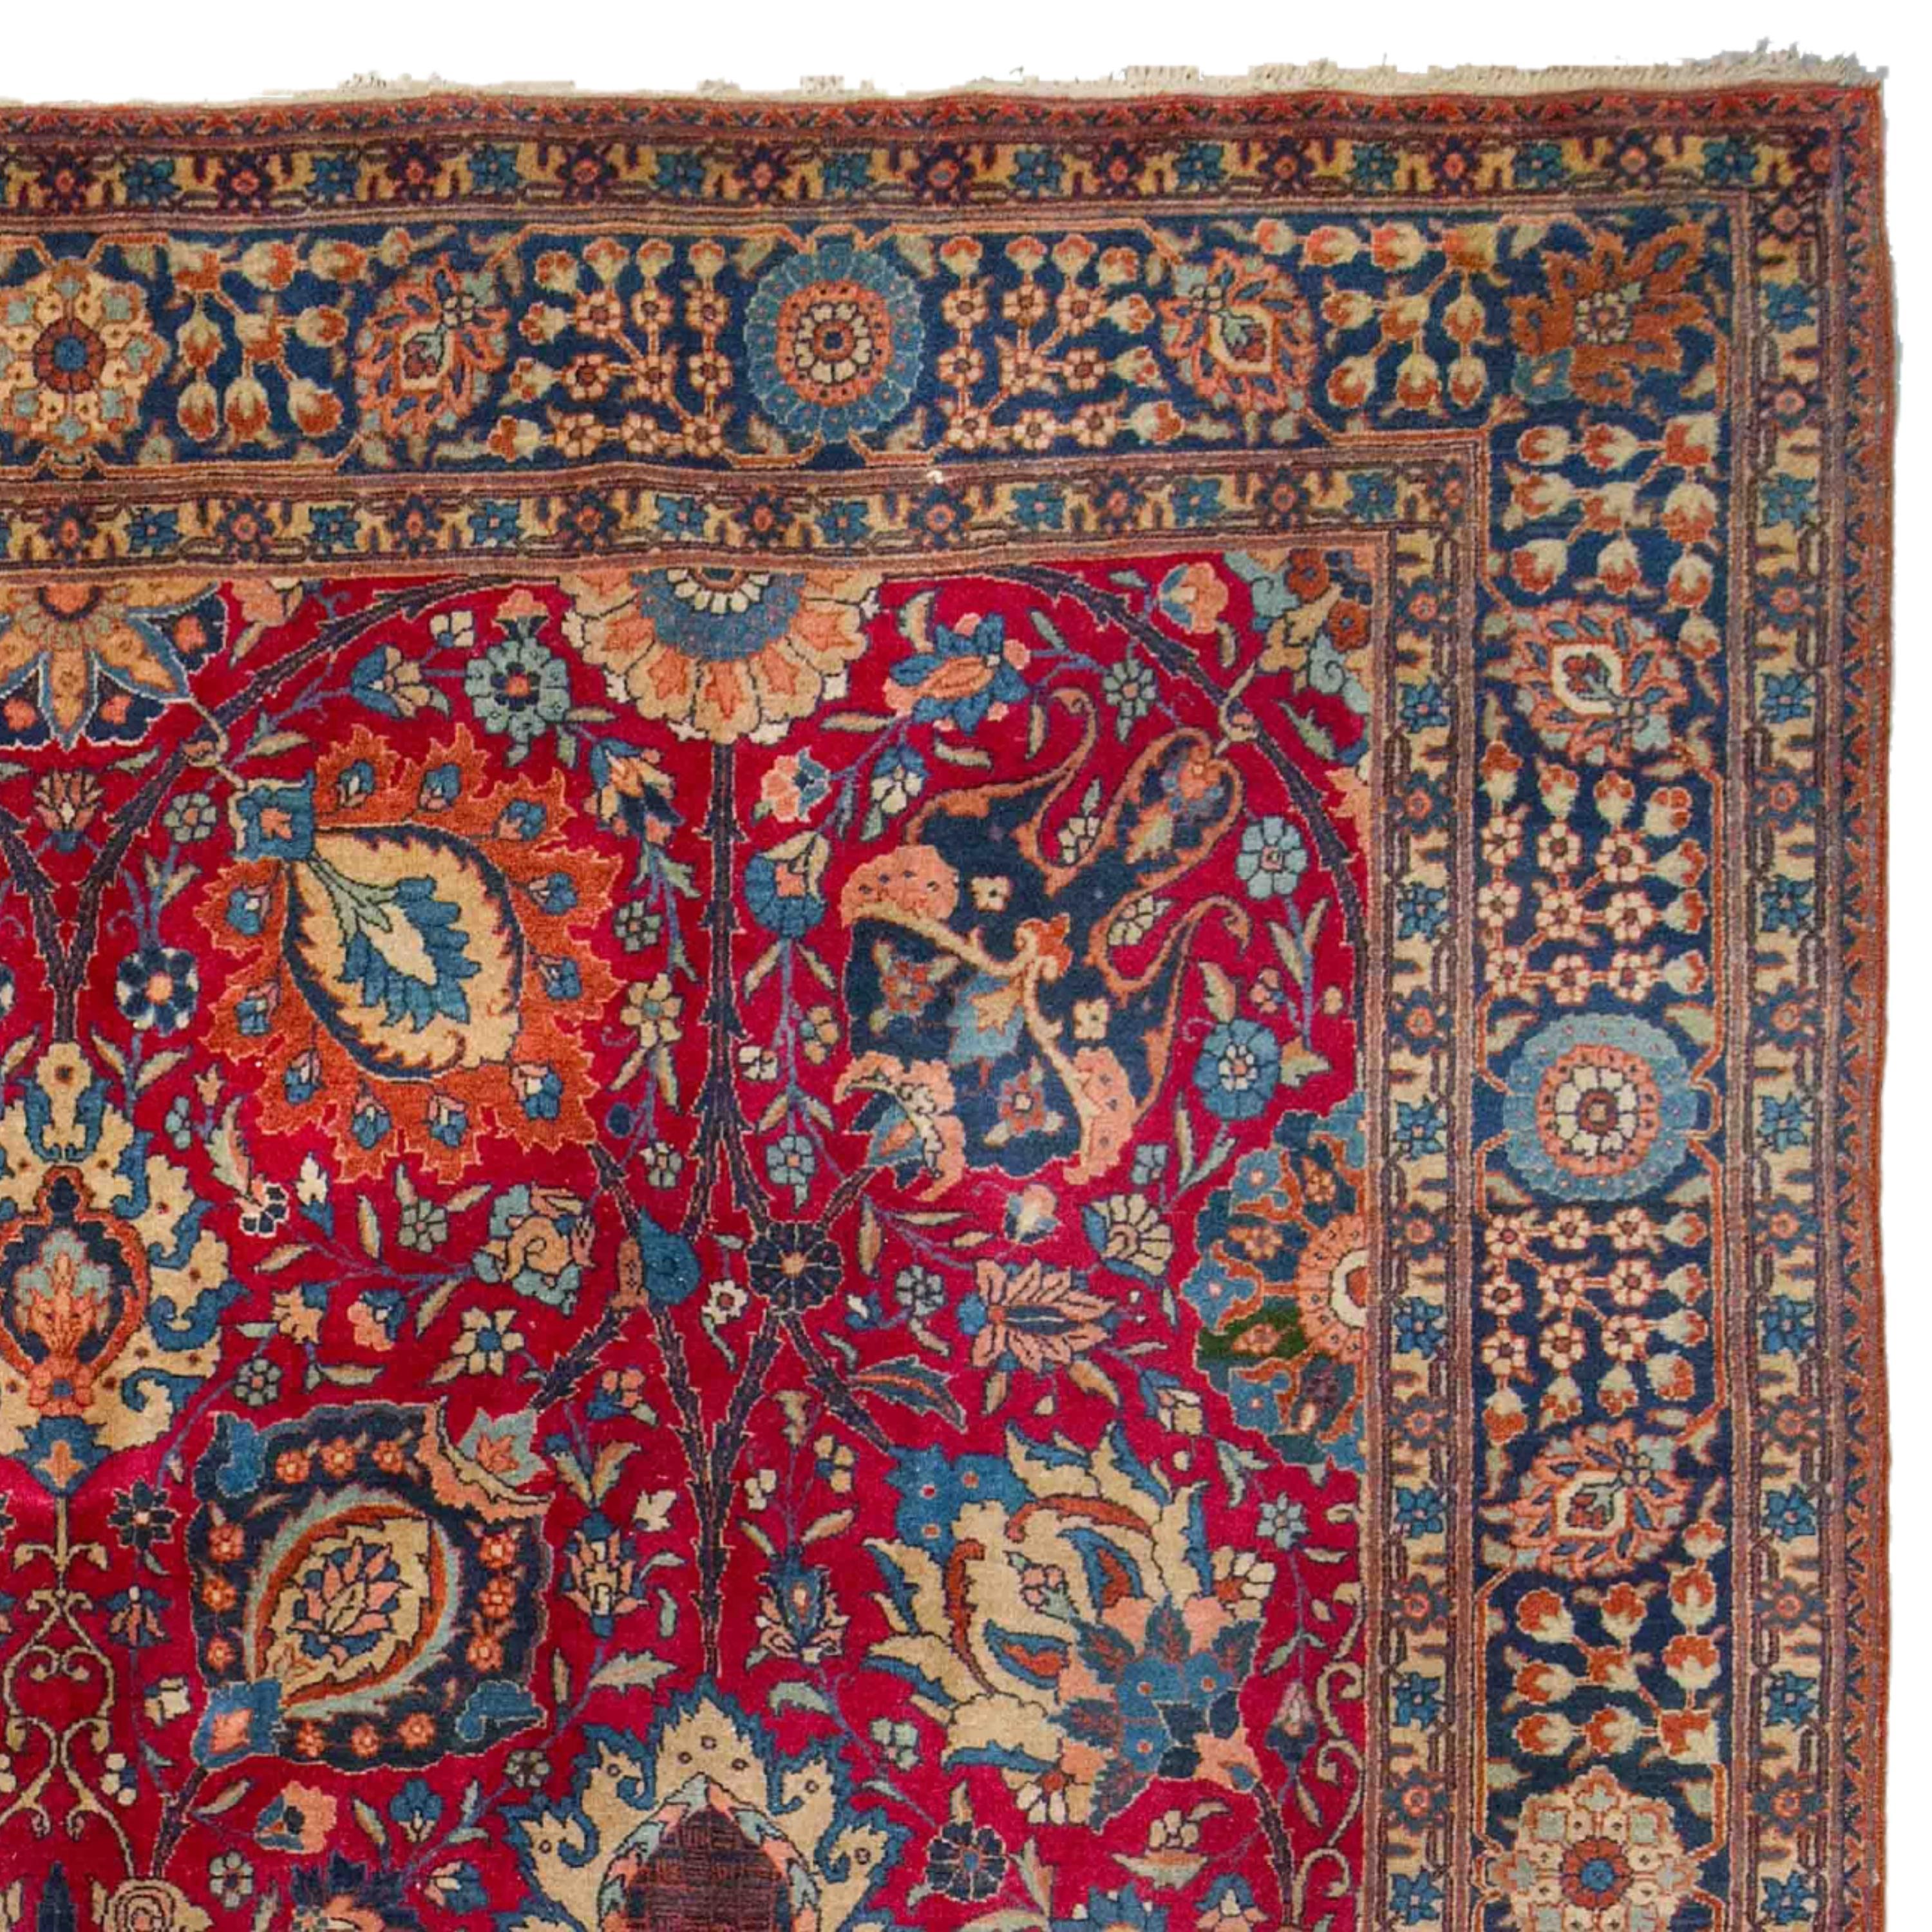 Antique Tabriz Rug - Late of 19th Century Tebriz Rug, Antique Carpet In Good Condition For Sale In Sultanahmet, 34